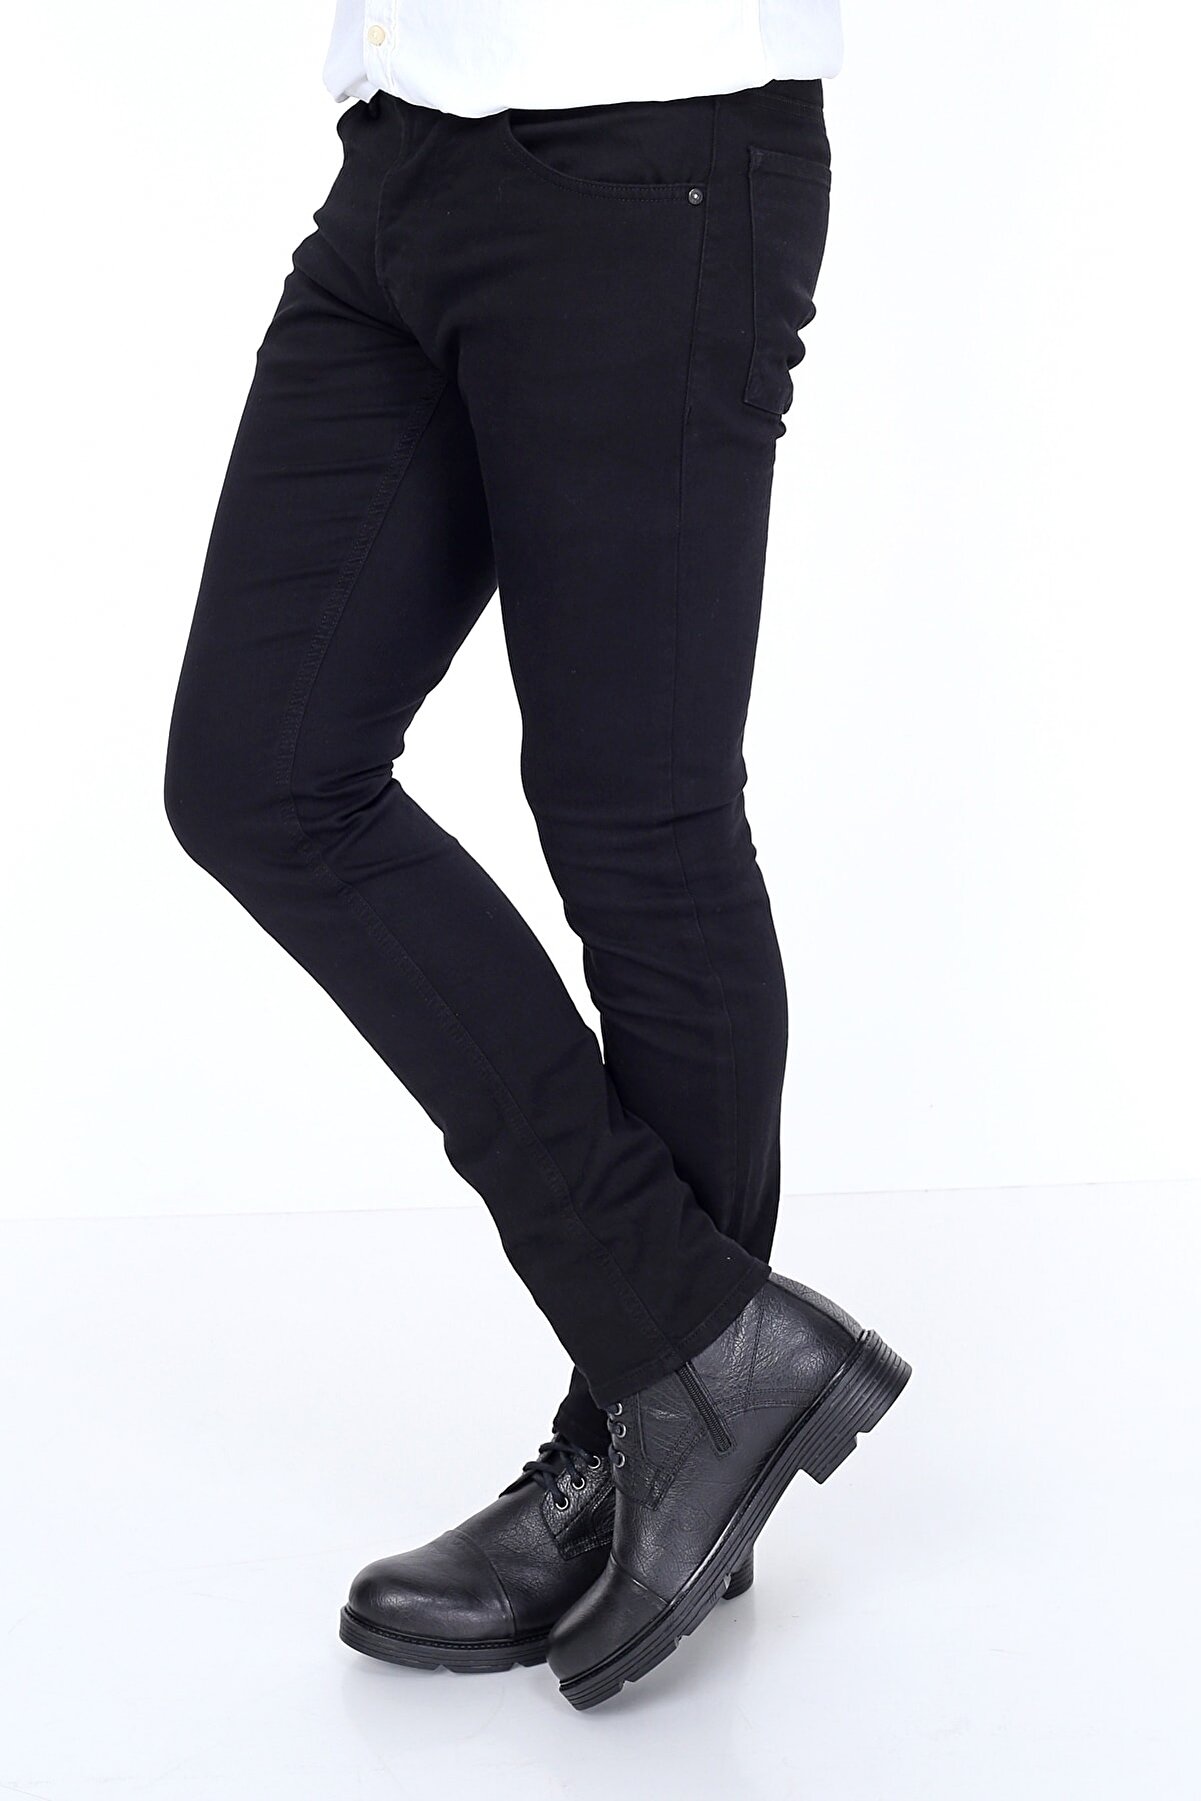 HW Denım 15858 Slim Fit Likralı Siyah Jeans Erkek Kot Pantolon